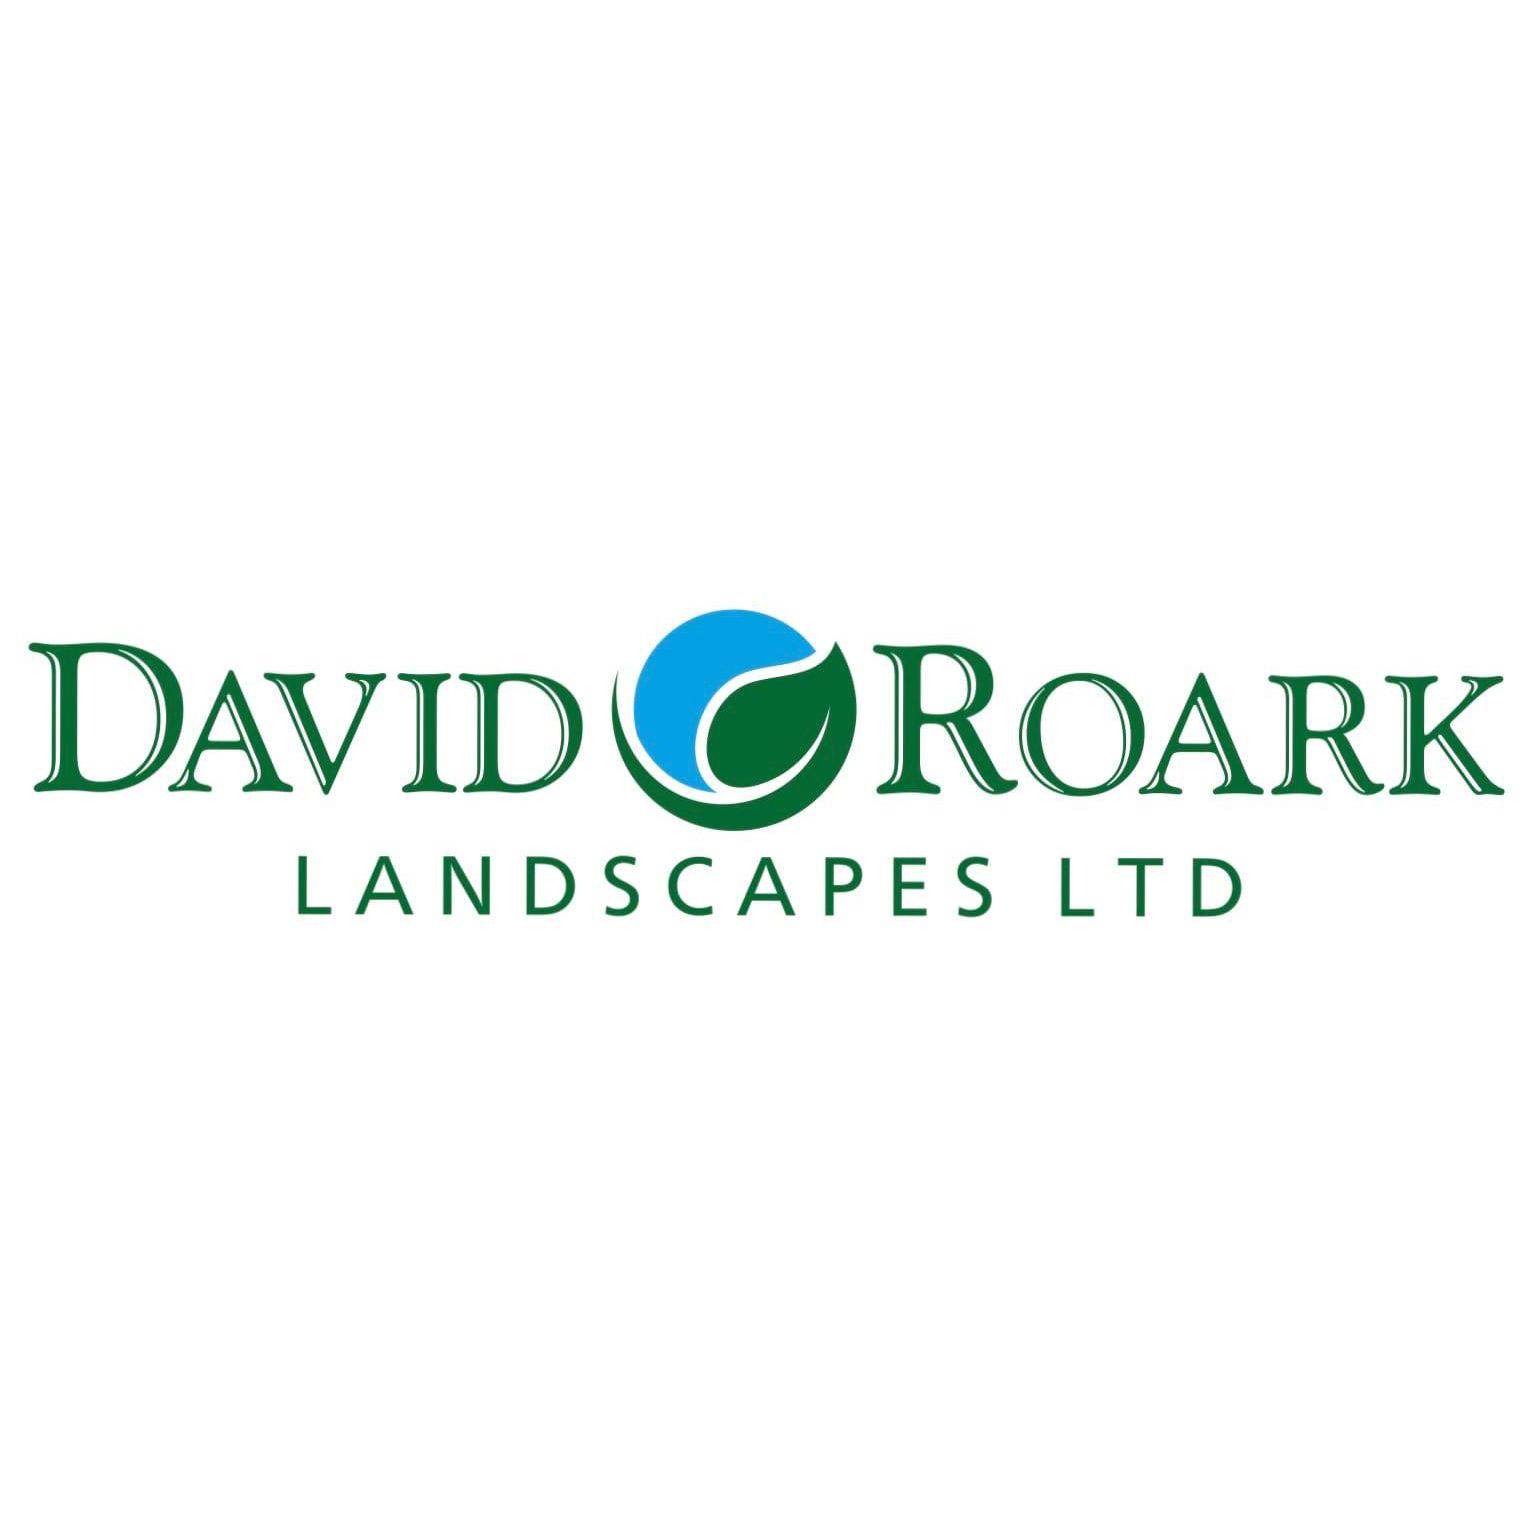 David Roark Landscapes Ltd - Horncastle, Lincolnshire LN9 5AE - 01507 526958 | ShowMeLocal.com